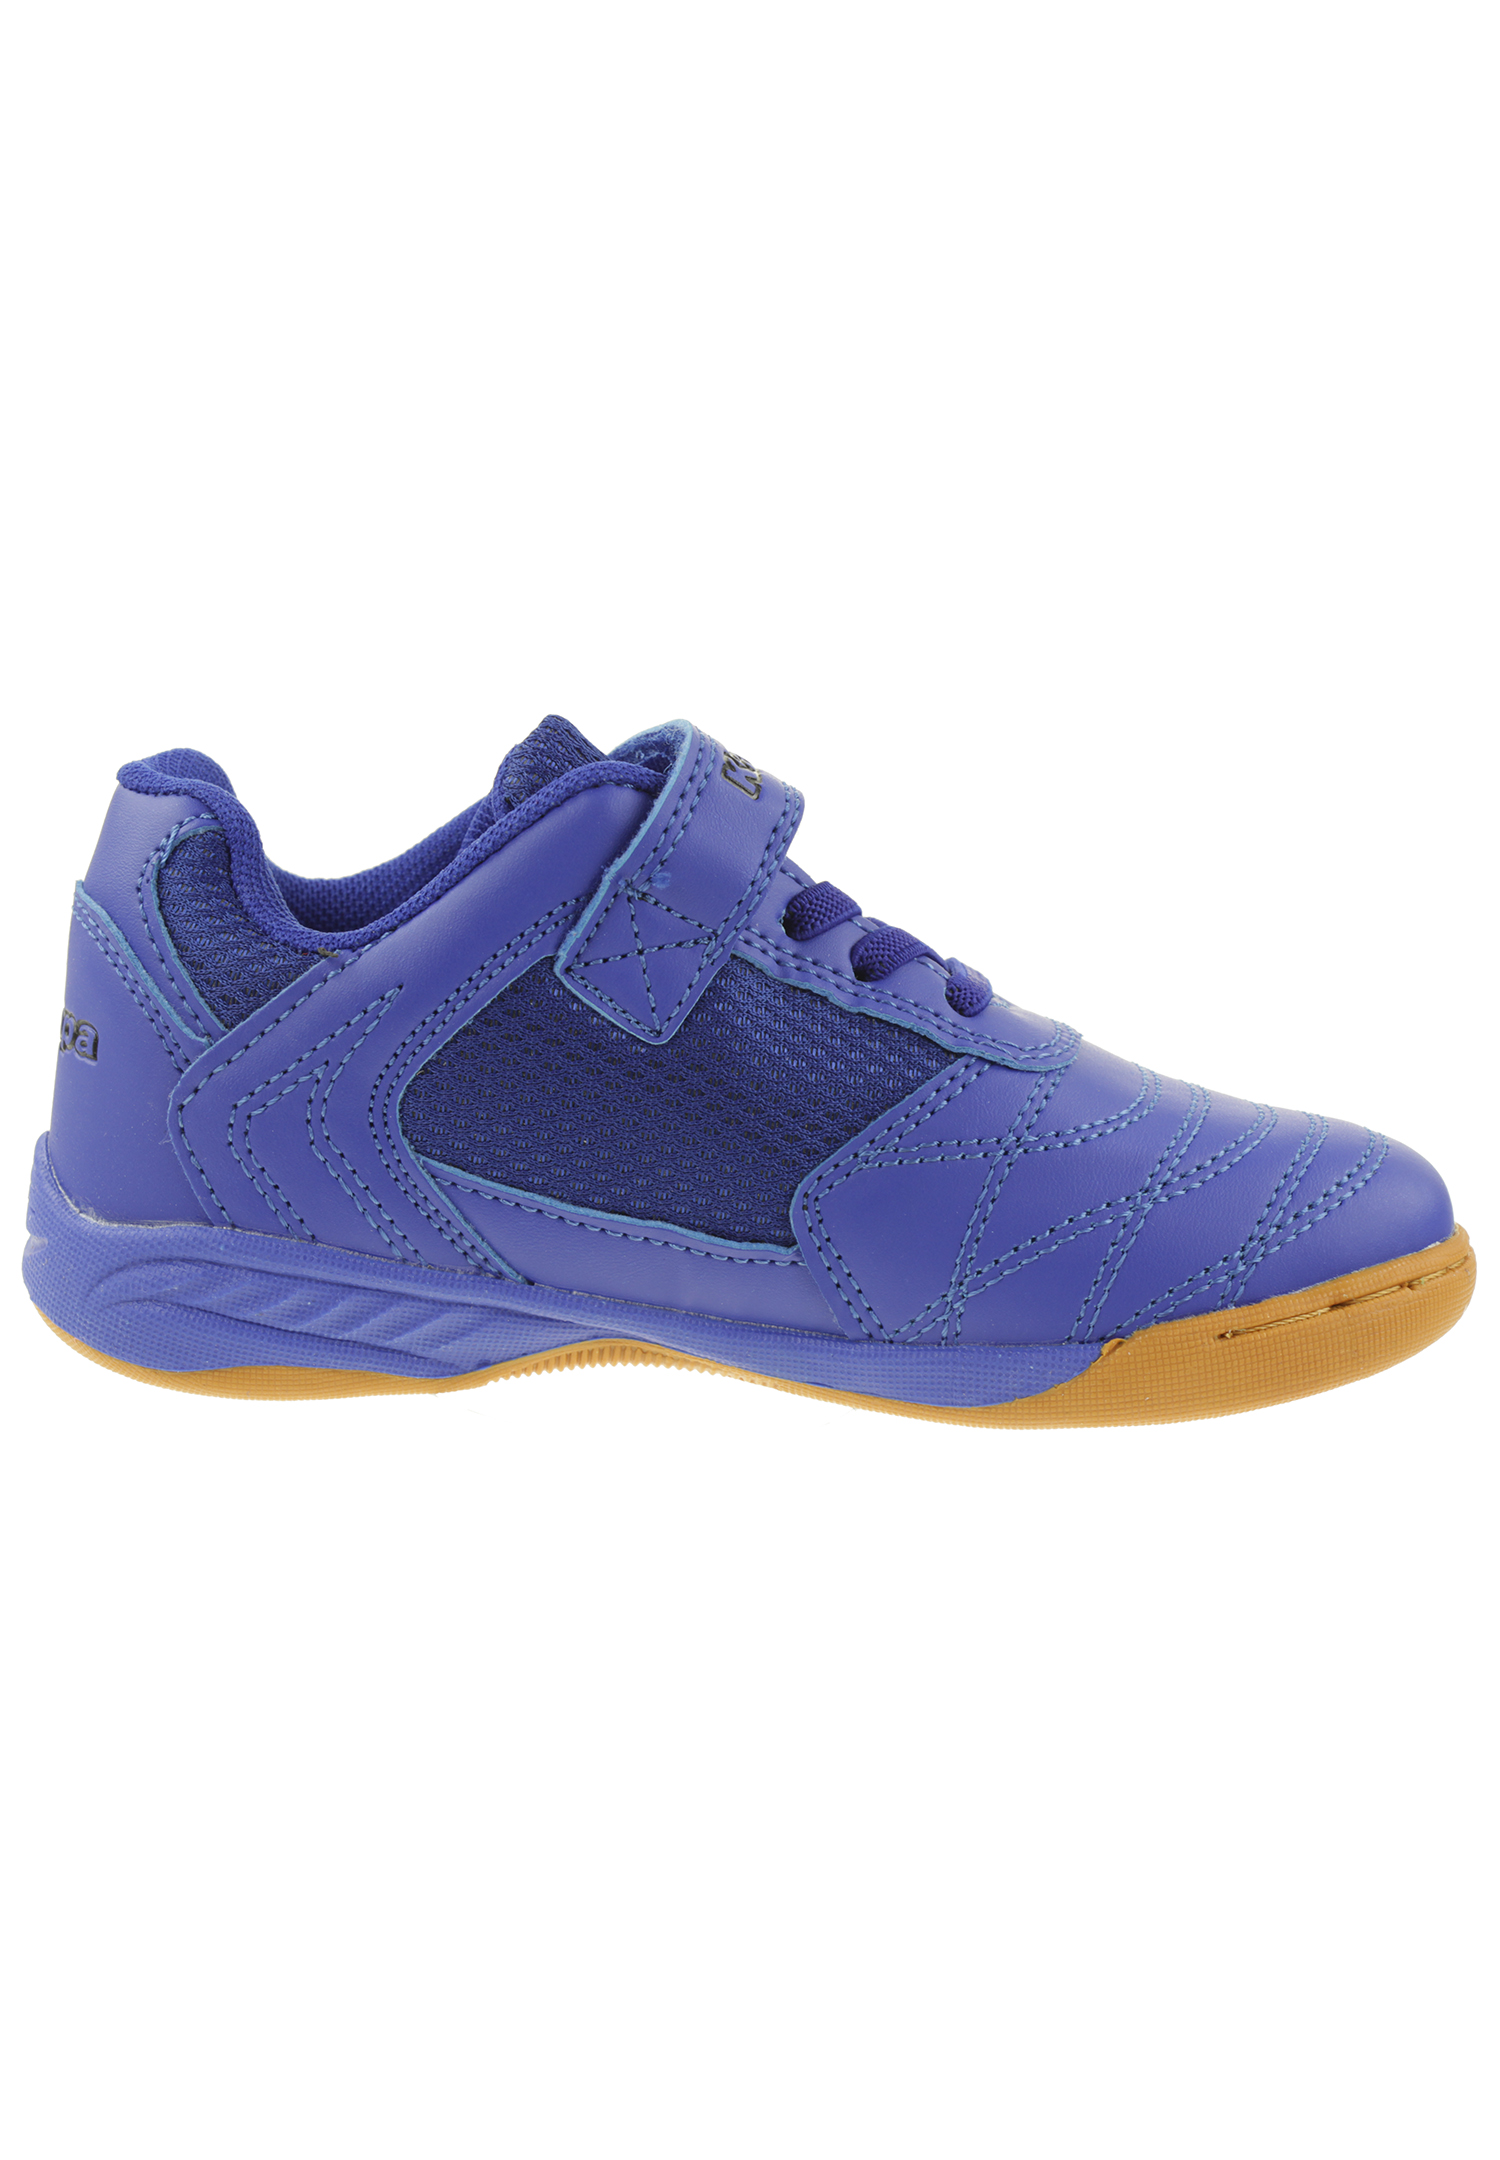 Kappa Unisex Kinder Sneaker Turnschuh 260765OCK 6011 blue/black | 